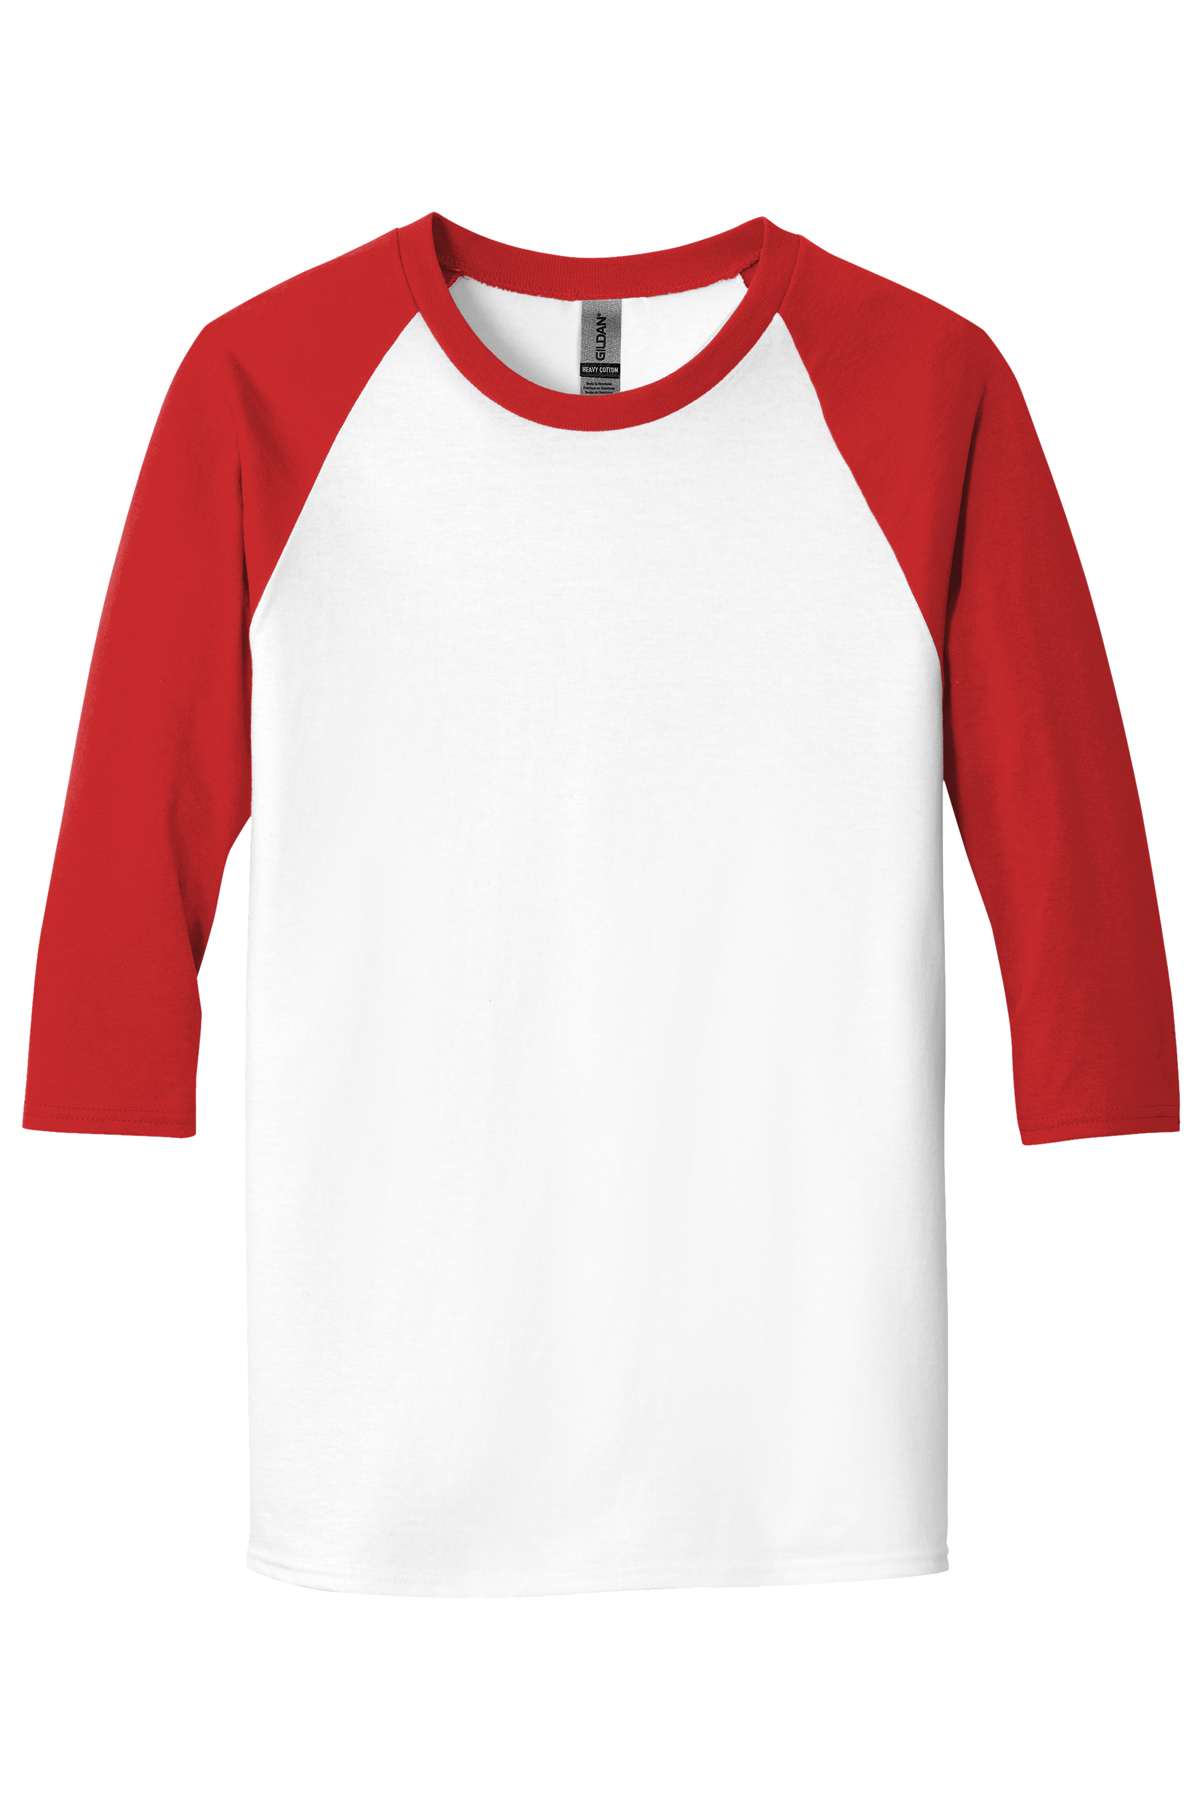 Women's Majestic Threads White/Camo Boston Red Sox Raglan 3/4-Sleeve T-Shirt Size: Medium